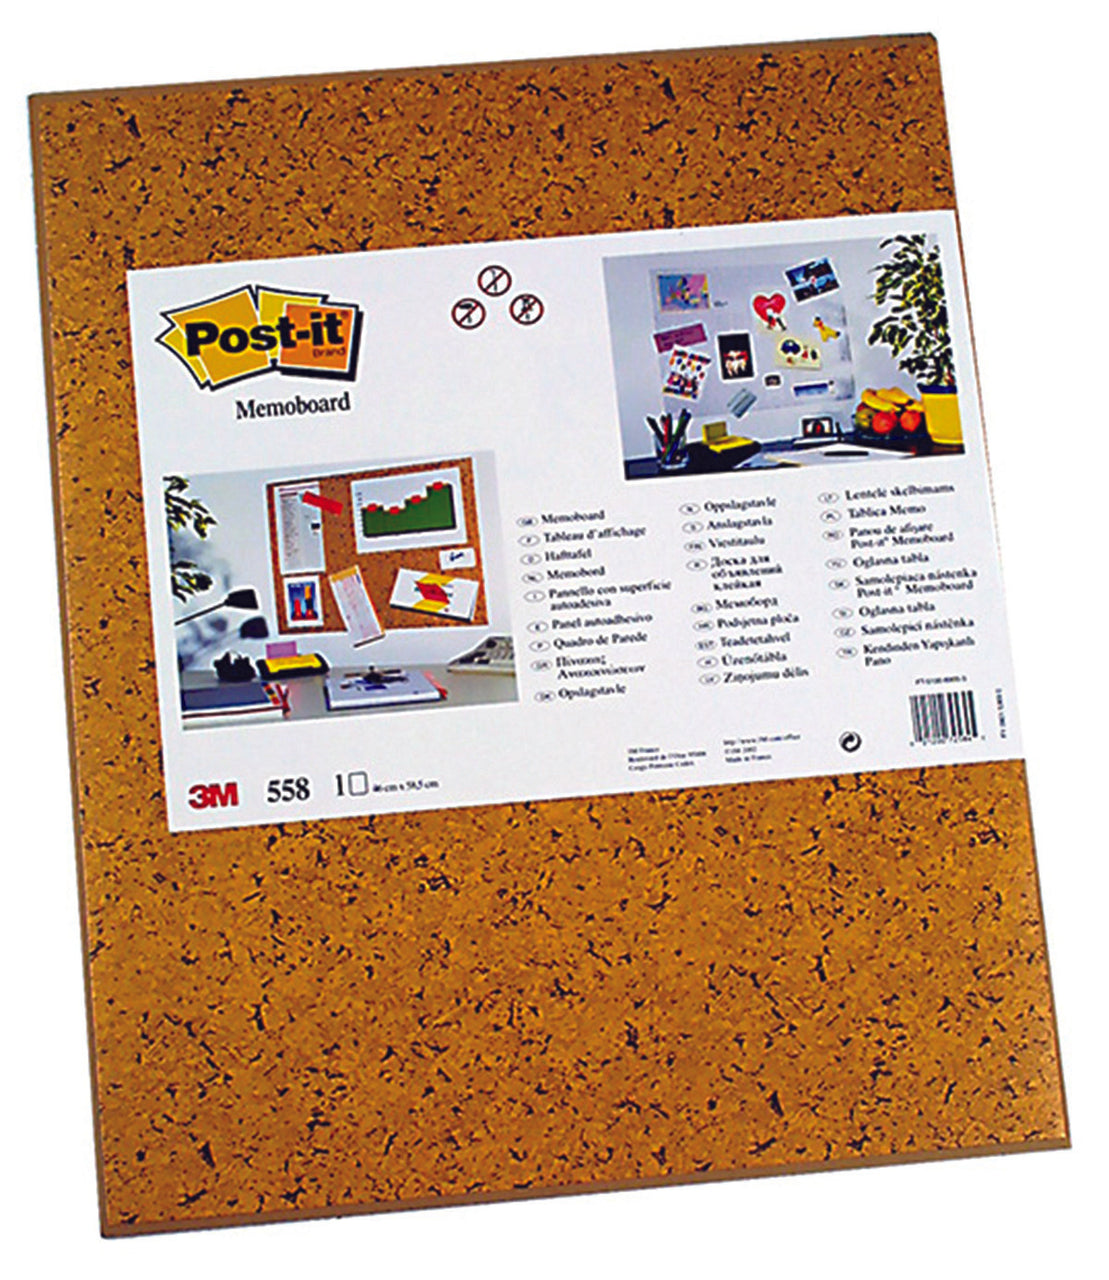 3M Post-It Self-Stick Bulletin Board / Memo Board (Brown)